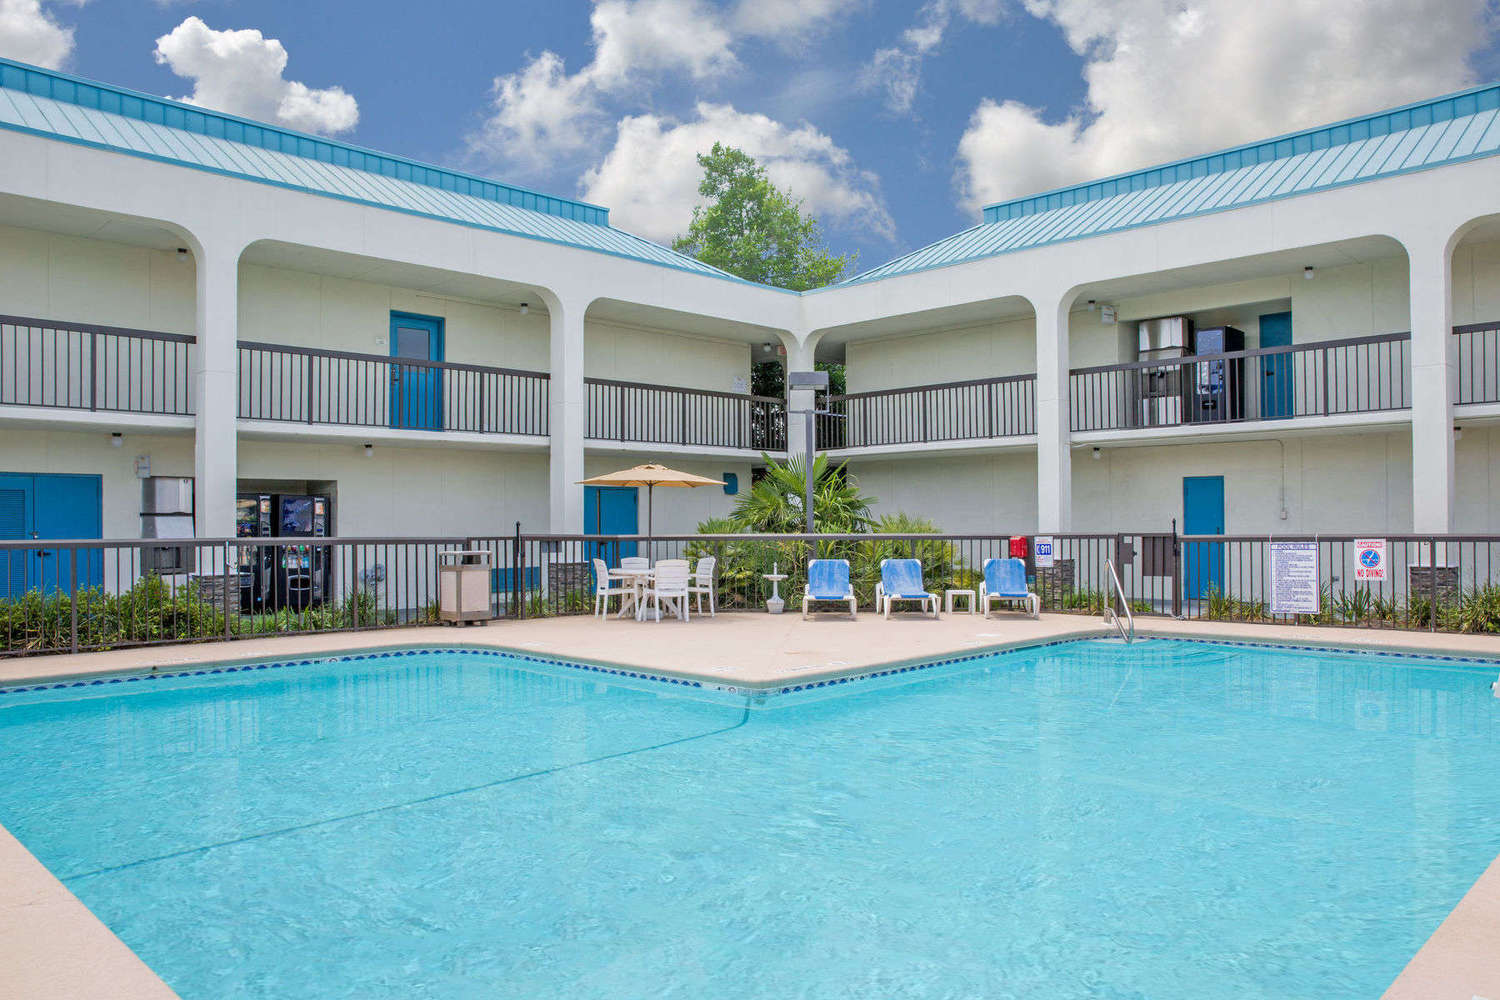 Baymont Inn & Suites/Camp Lejeune, Jacksonville, NC Jobs Hospitality